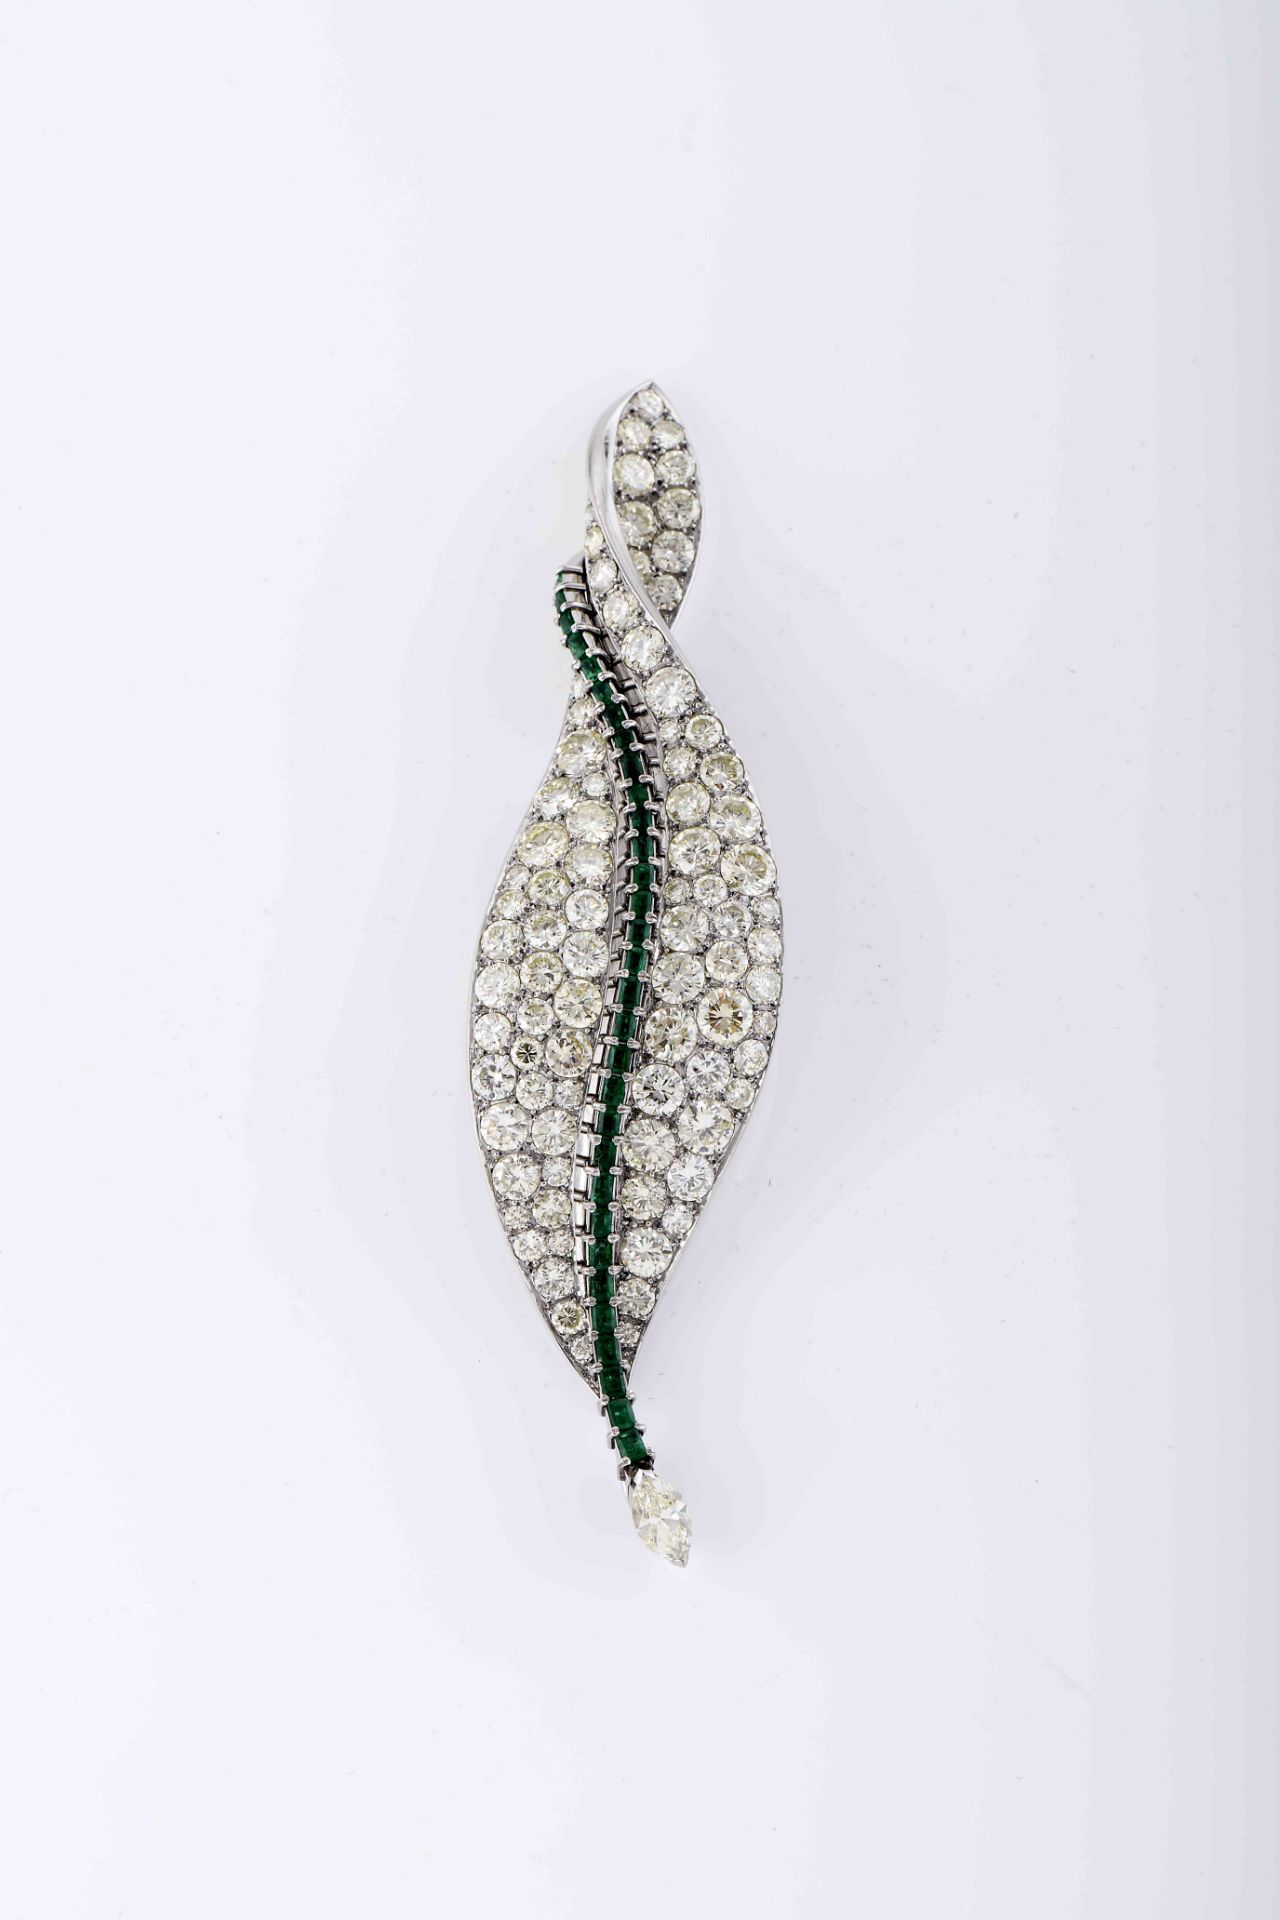 A "Leaf" pendant/brooch - Image 2 of 2